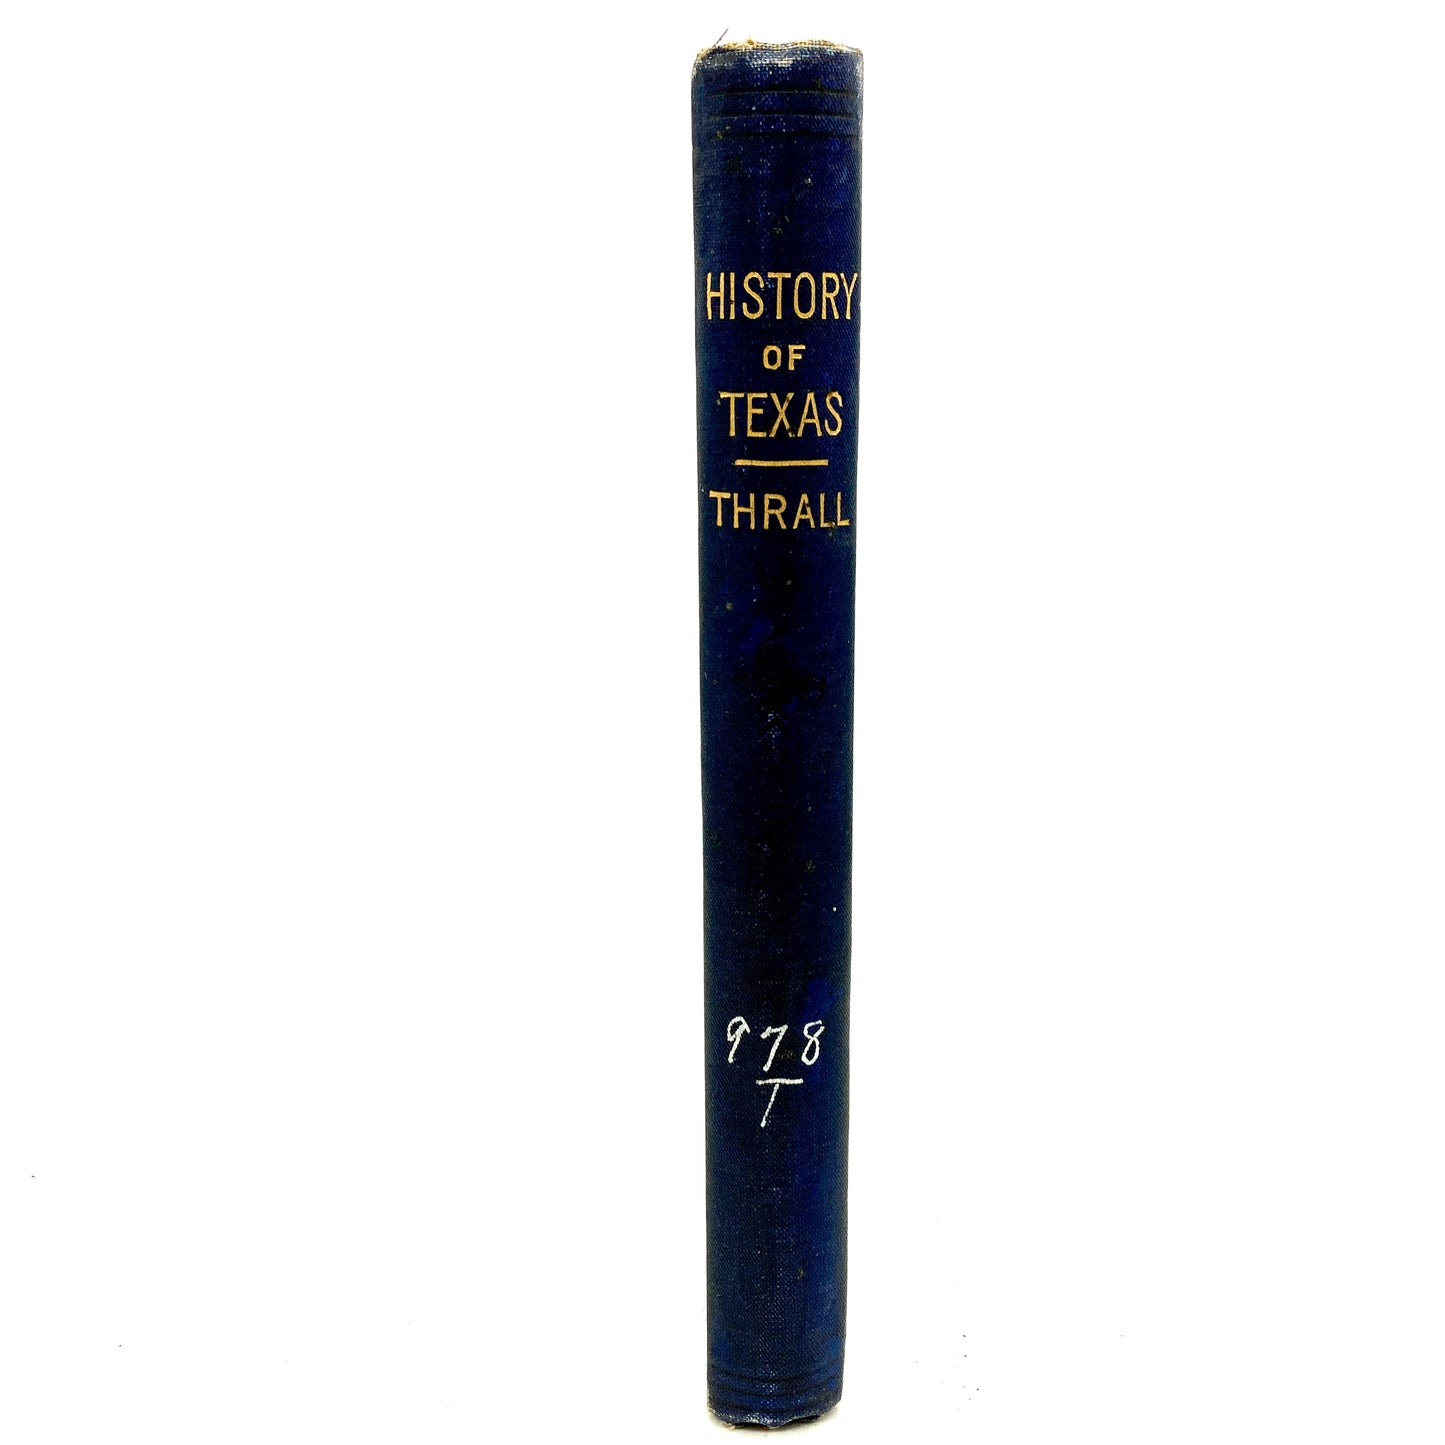 THRALL, H.S. "A History of Texas" [University Publishing Company, 1885]